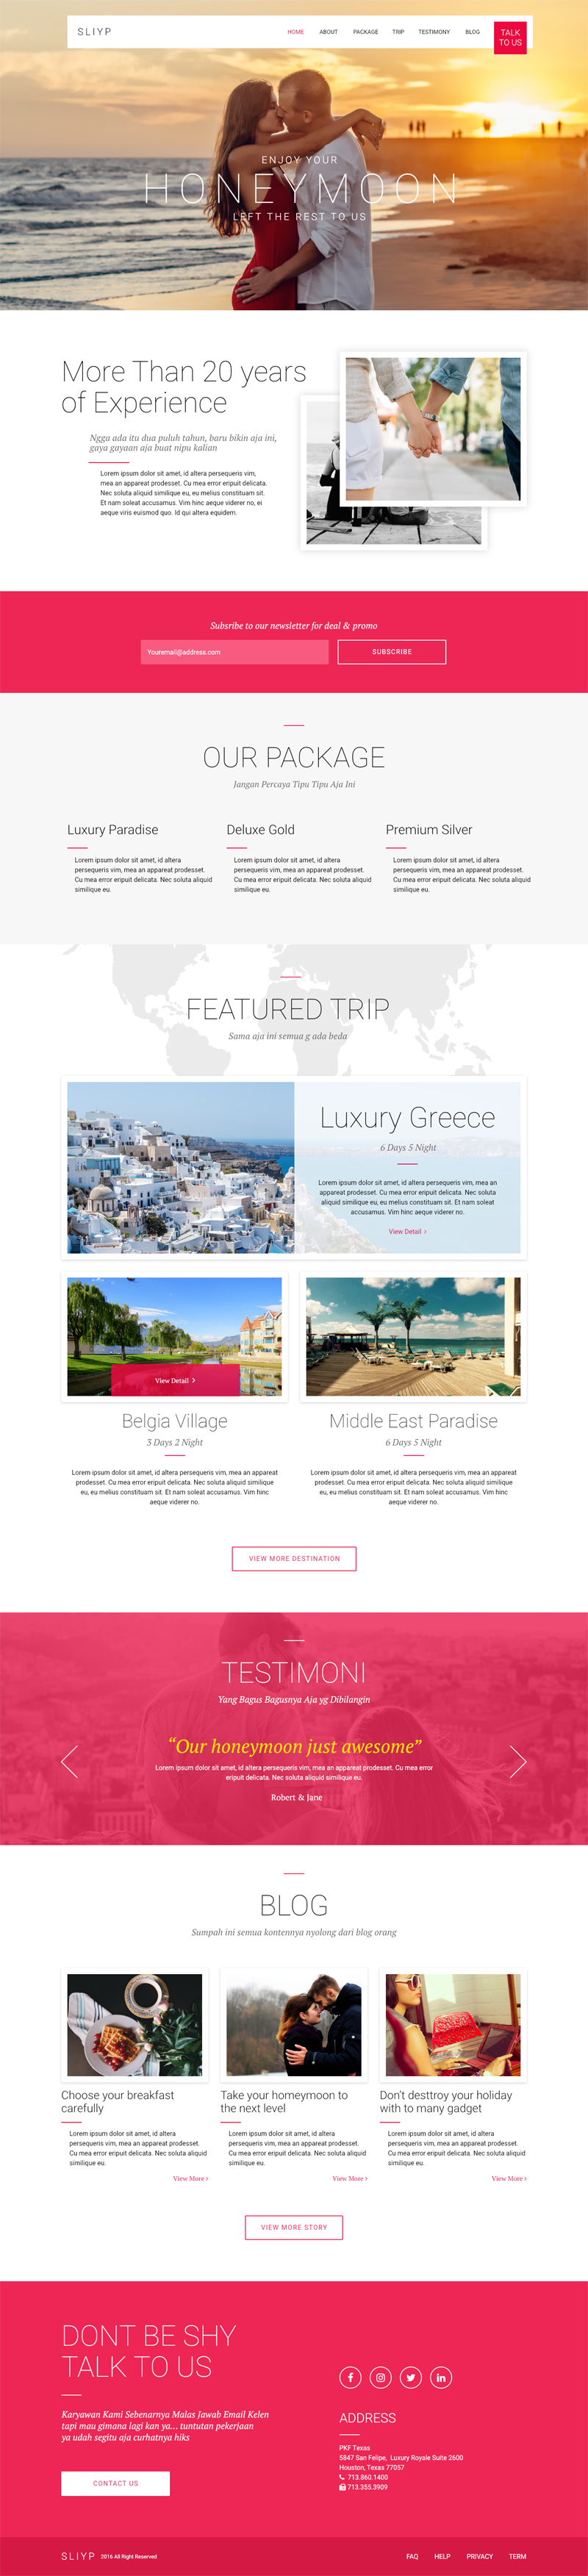 Adobe XDで作られたSliyp Travel Agencyランディングページ